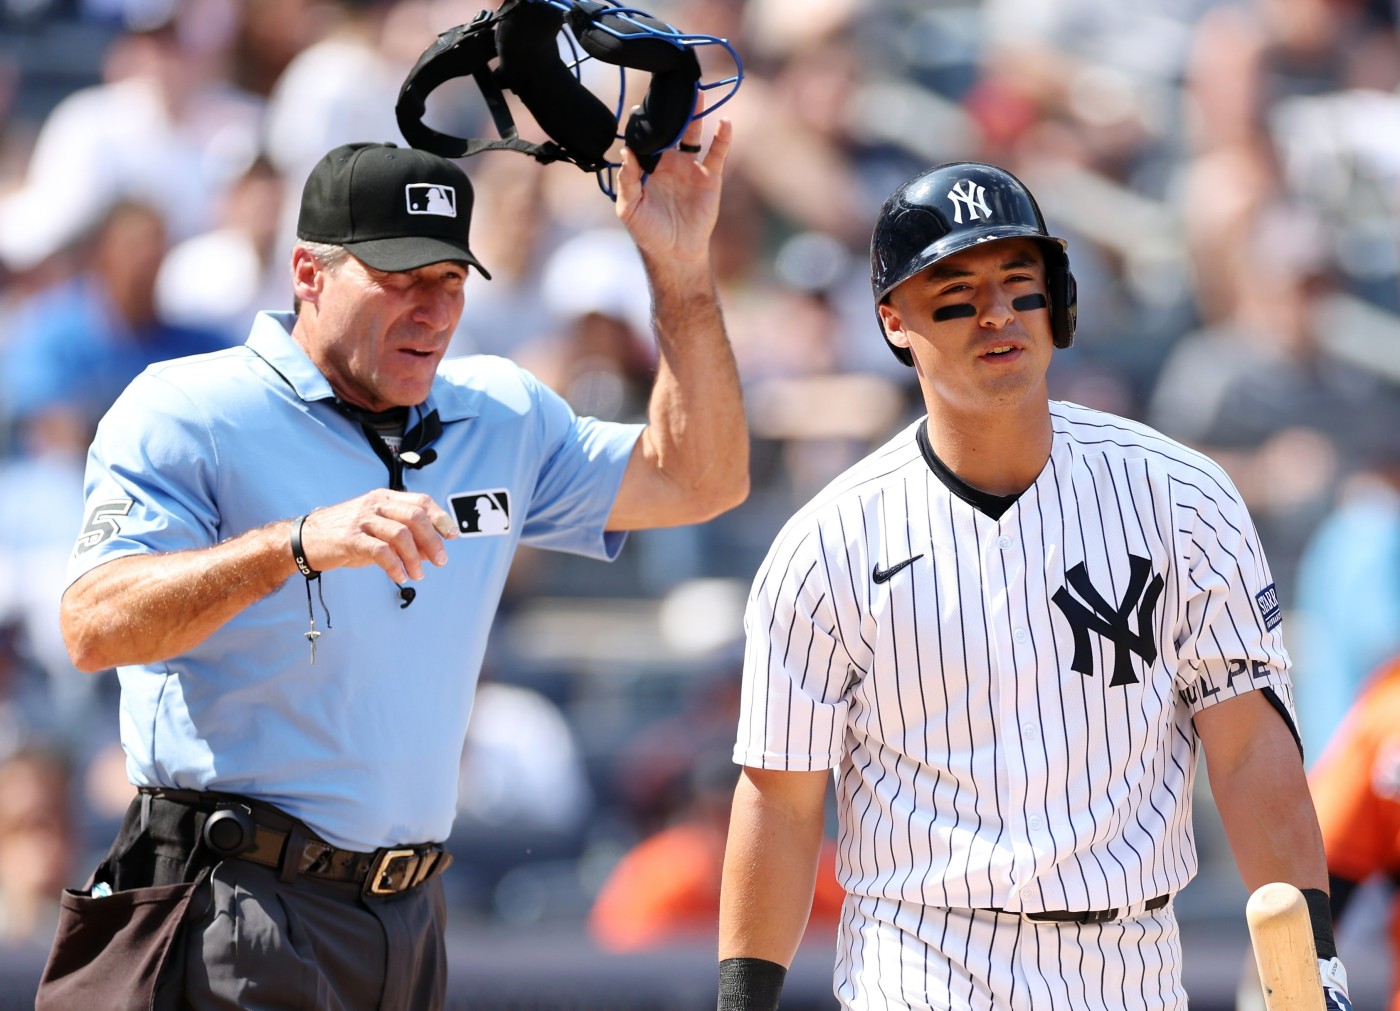 MLB umpire Angel Hernandez misses several strike calls